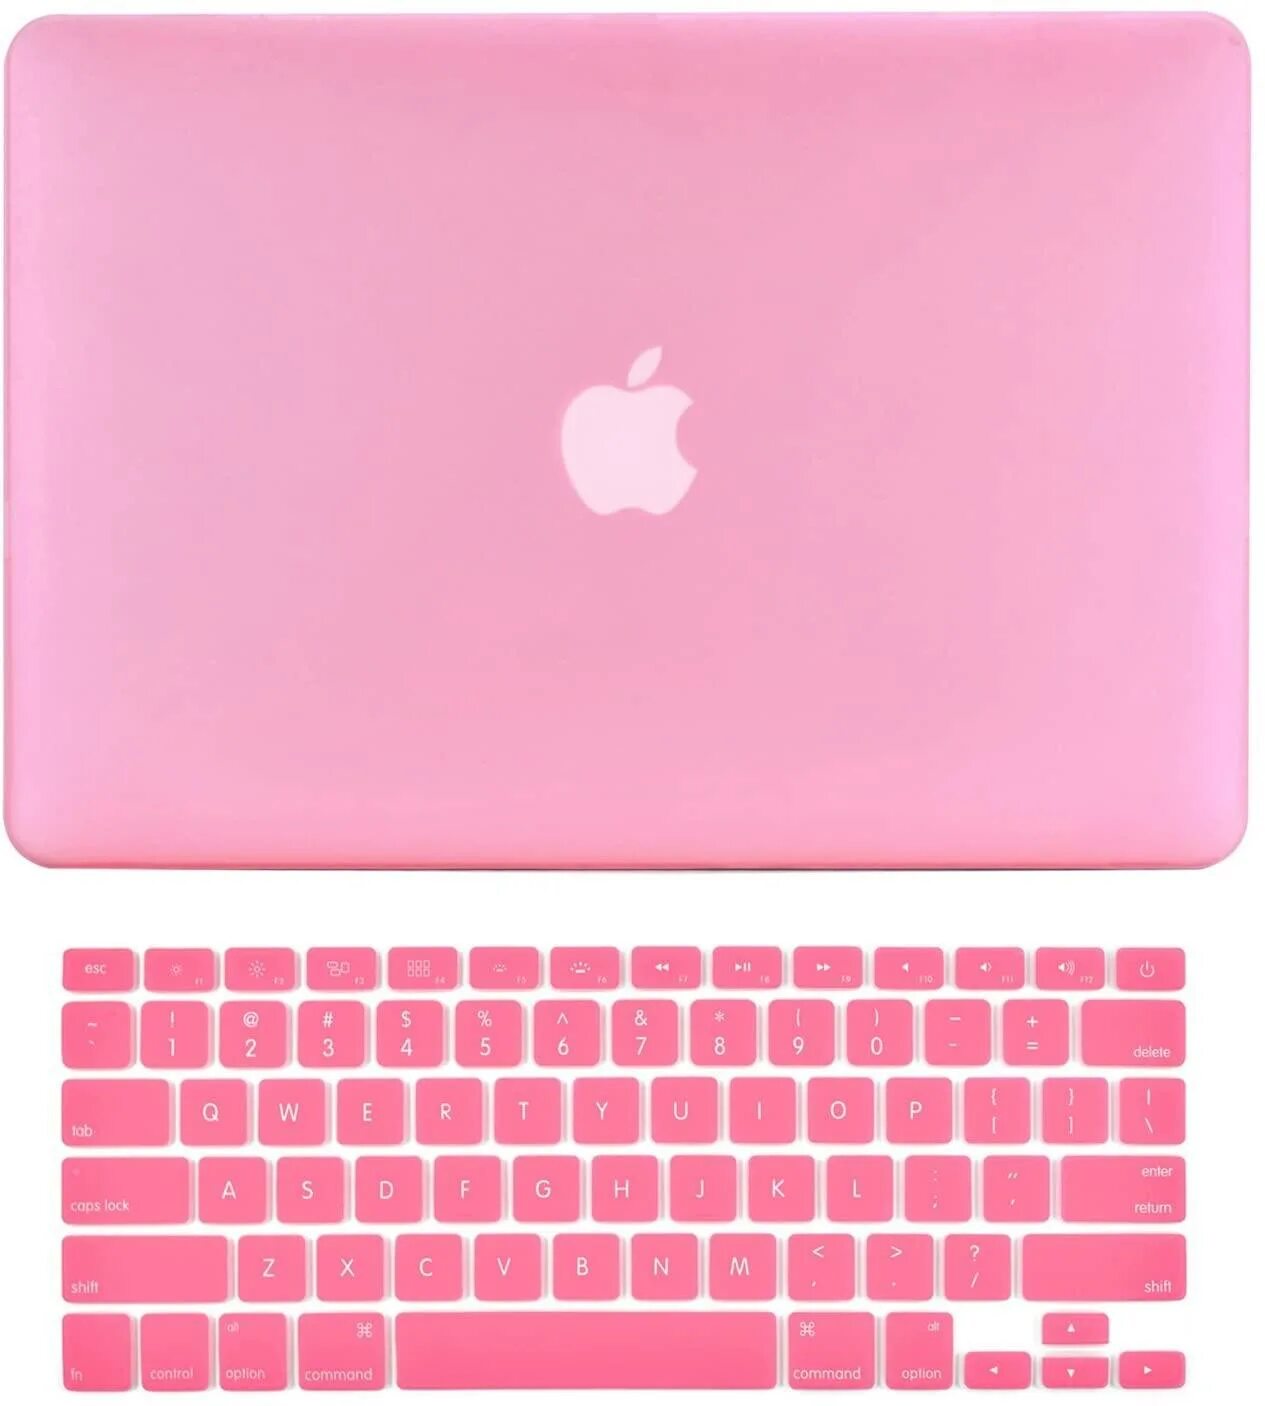 MACBOOK a1708. Макбук Эйр 13 розовый. MACBOOK Pro 13 m1 розовый. Ноутбук розовый. Розовый ноутбук купить